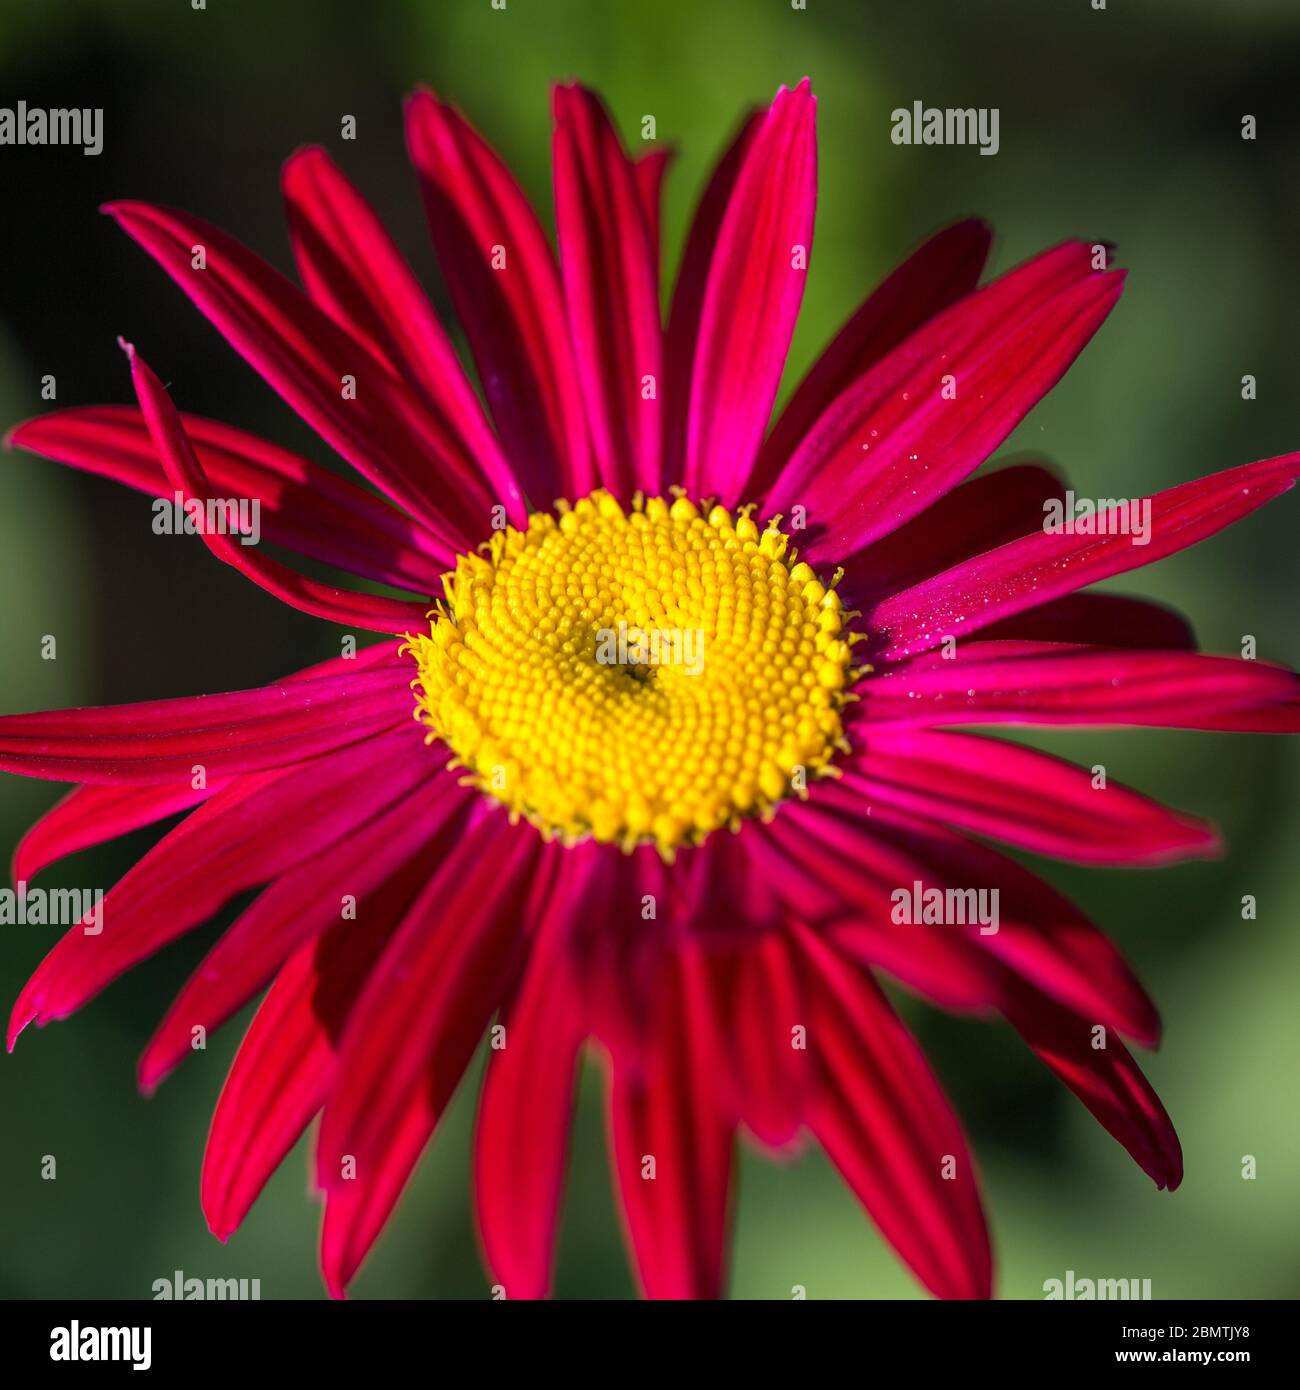 Yellow center of red beautiful pyrethrum flower showing fibonacci pattern. Stock Photo